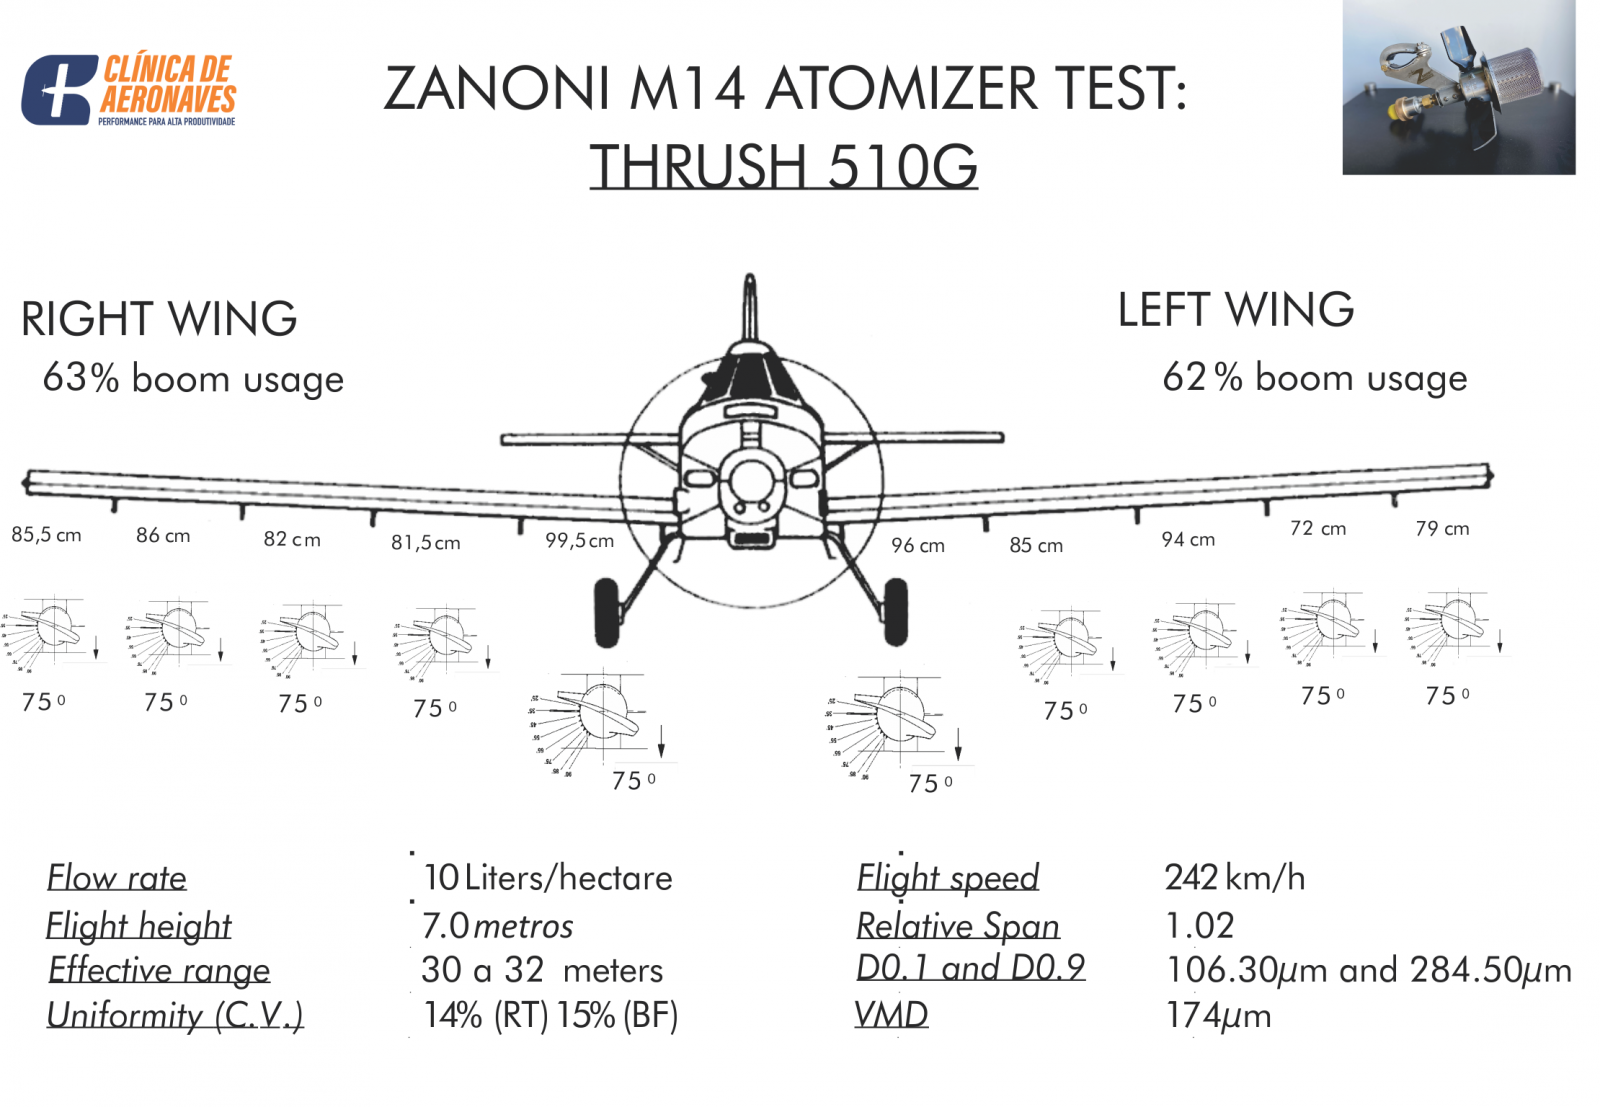 Zanoni atomizer nozzles show excellent performance in turbo aircraft